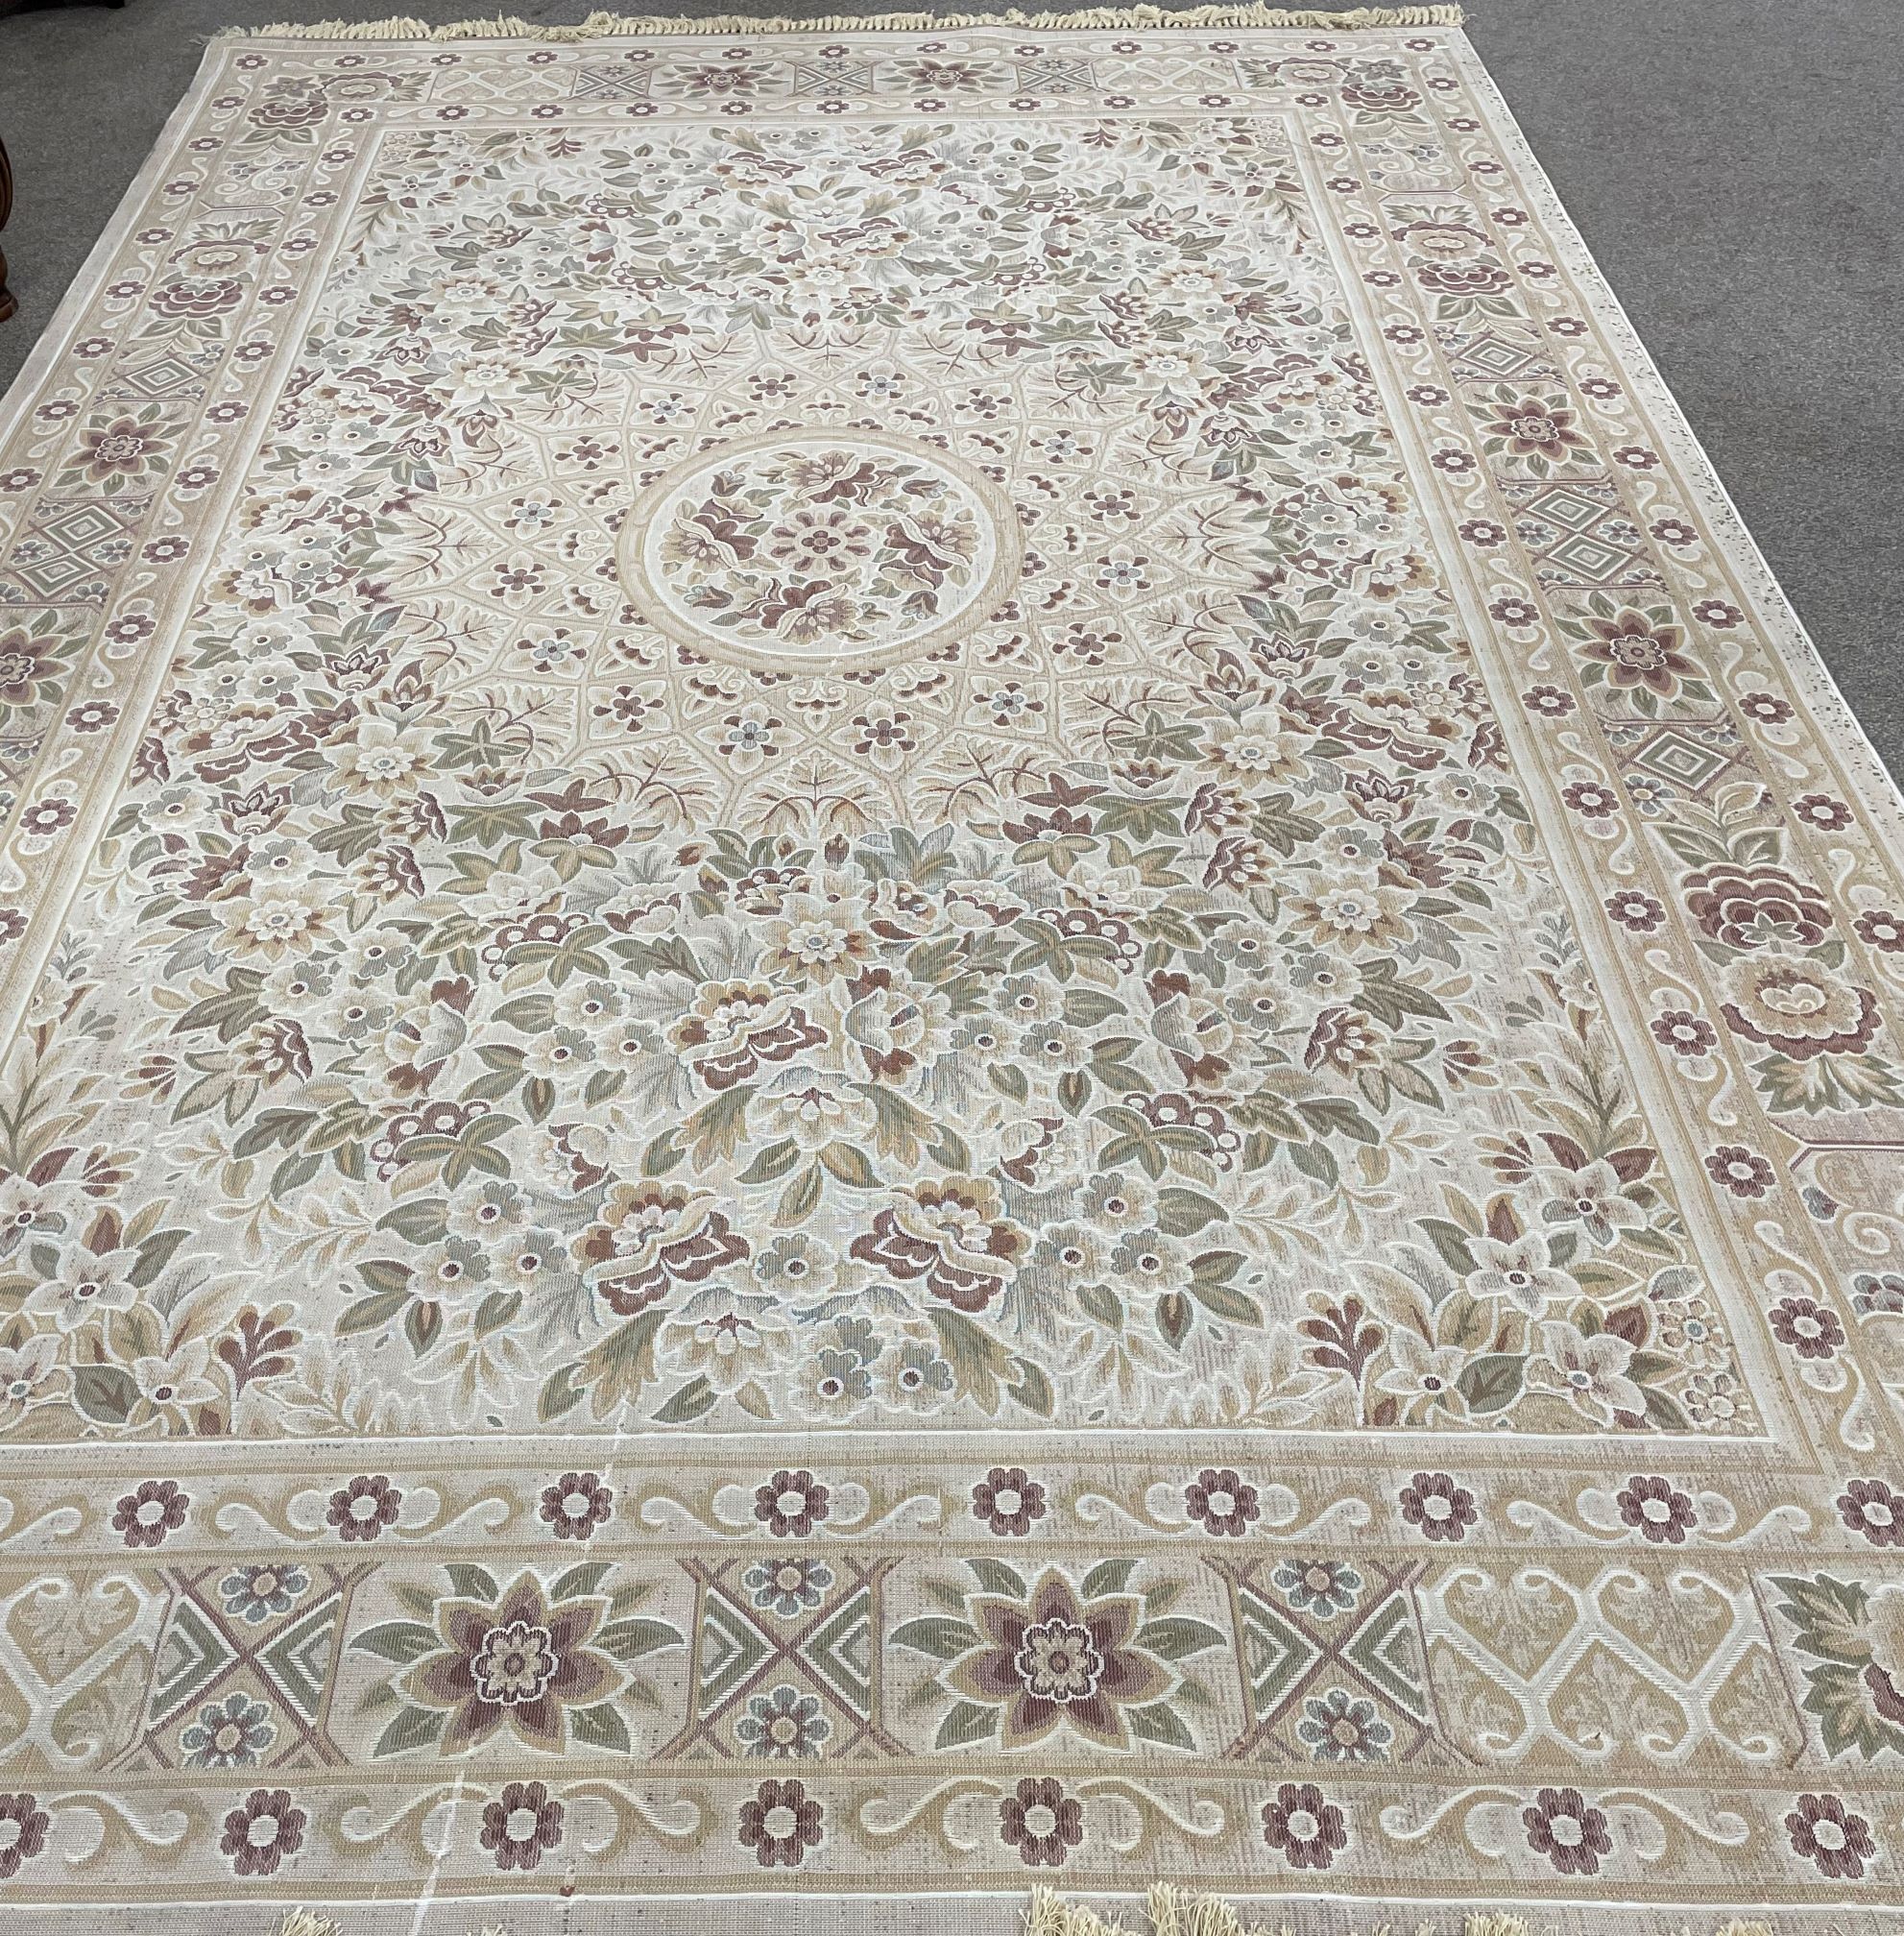 Gold & cream ground full pile Oriental carpet 350cm by 240cm - Image 4 of 8